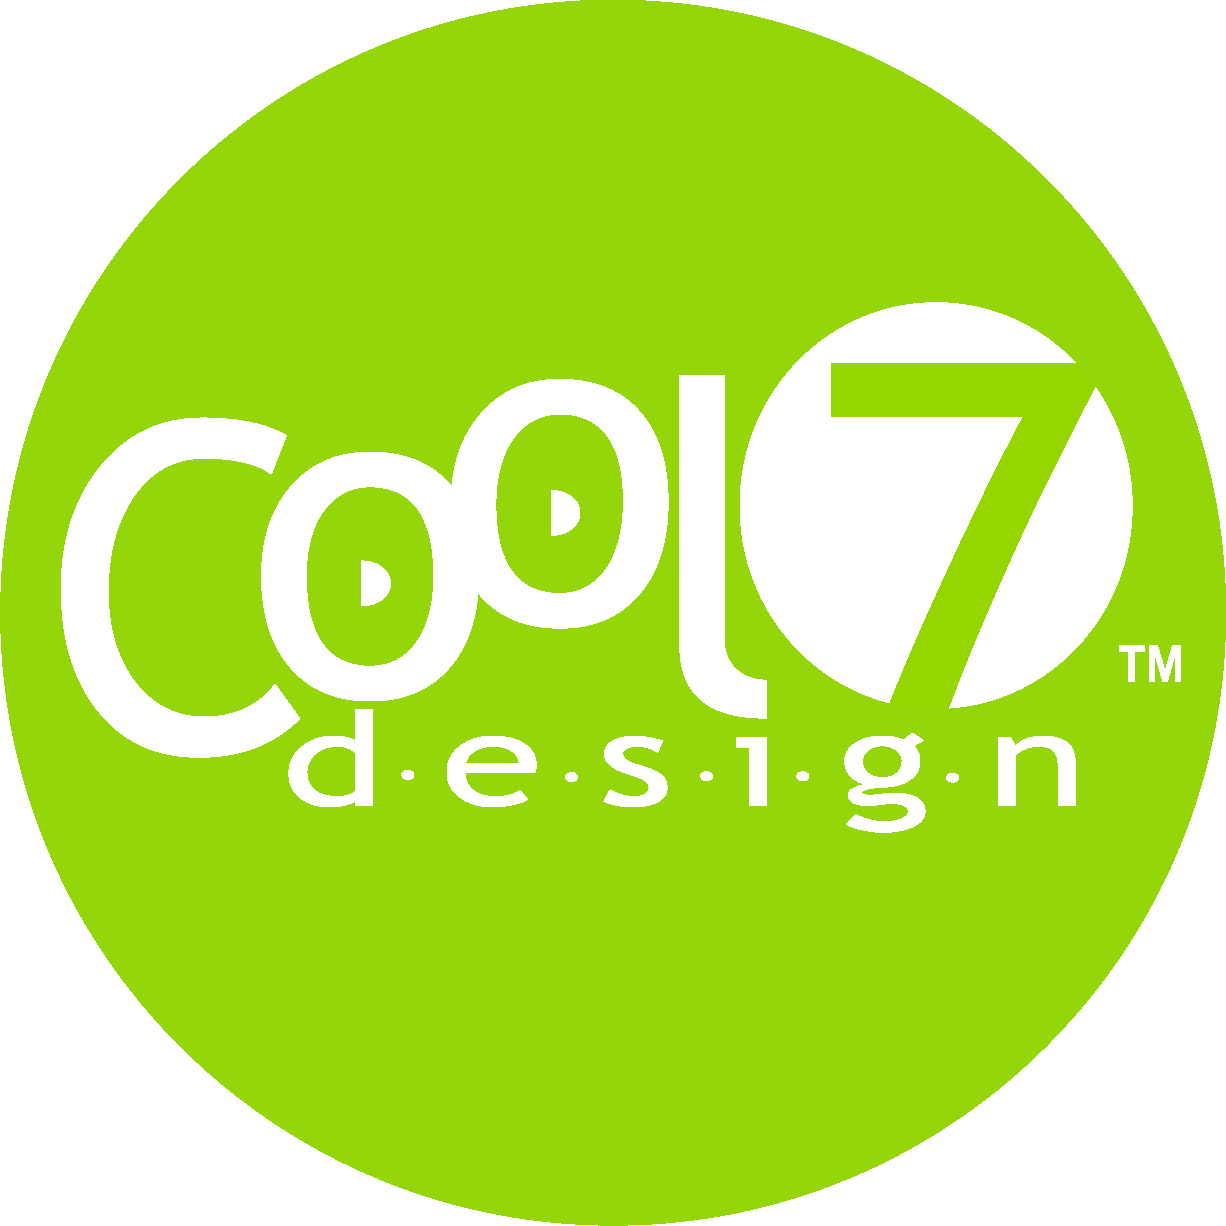 Cool 7 design logo